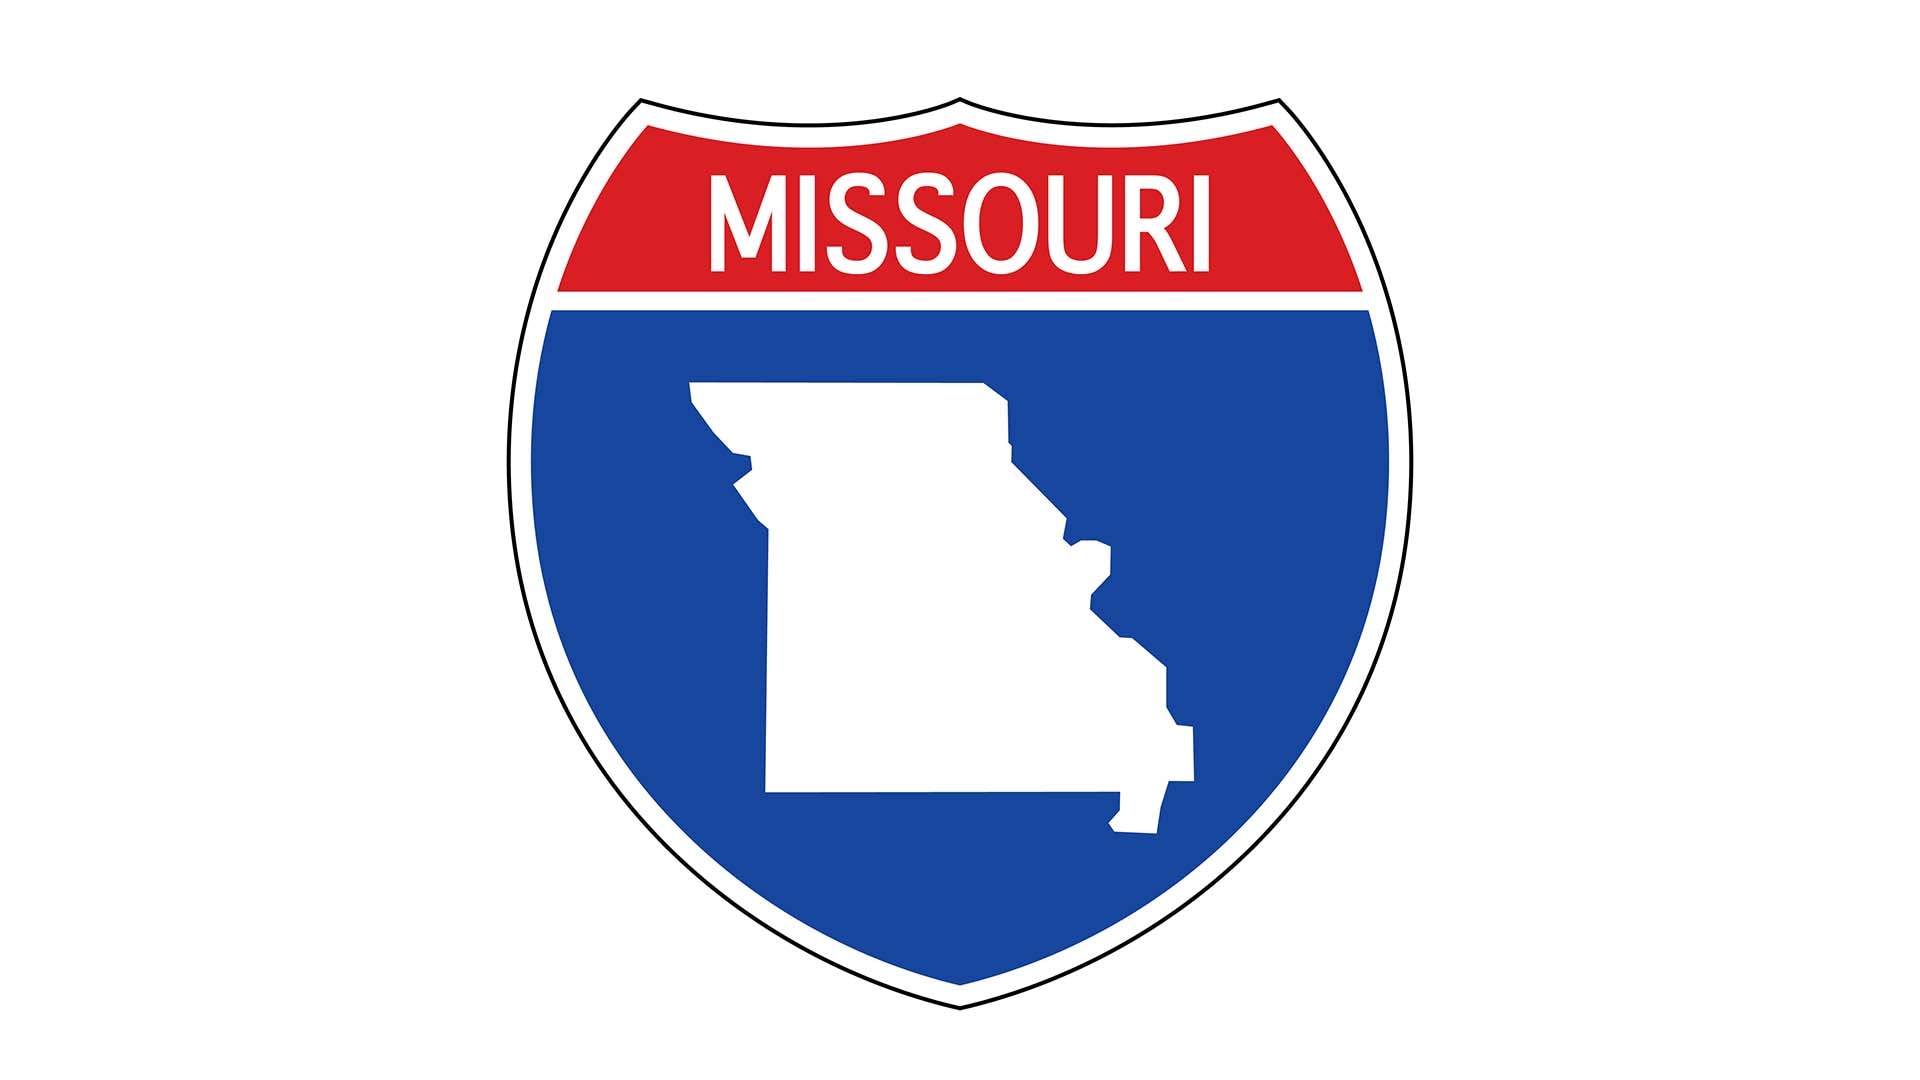 Missouri state roadside sign